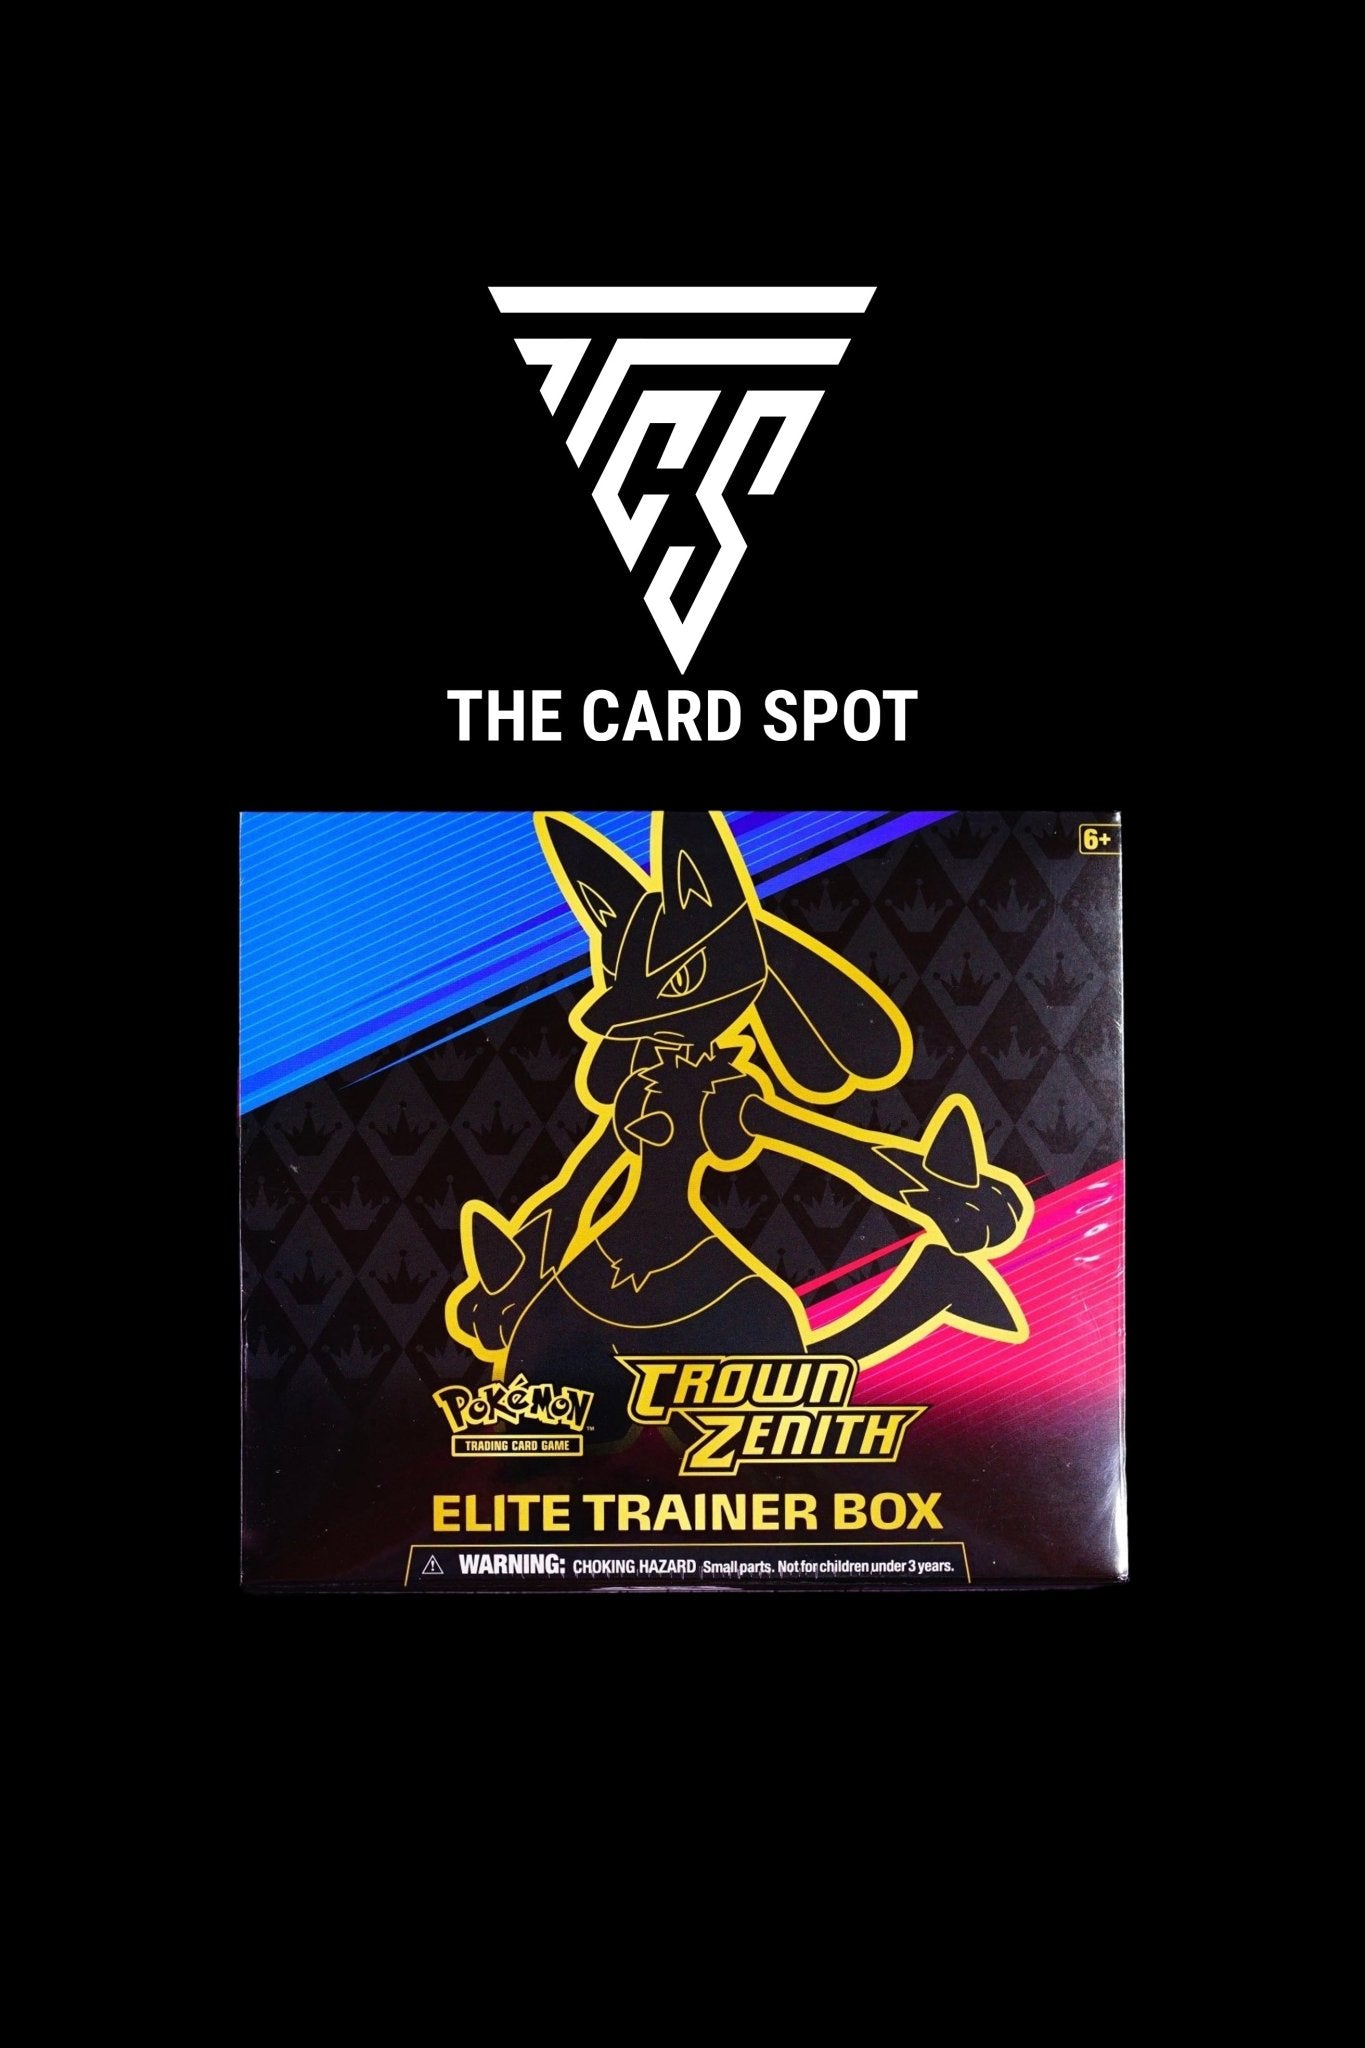 Crown zenith elite trainer box - THE CARD SPOT PTY LTD.Pokemon BoosterPokémon